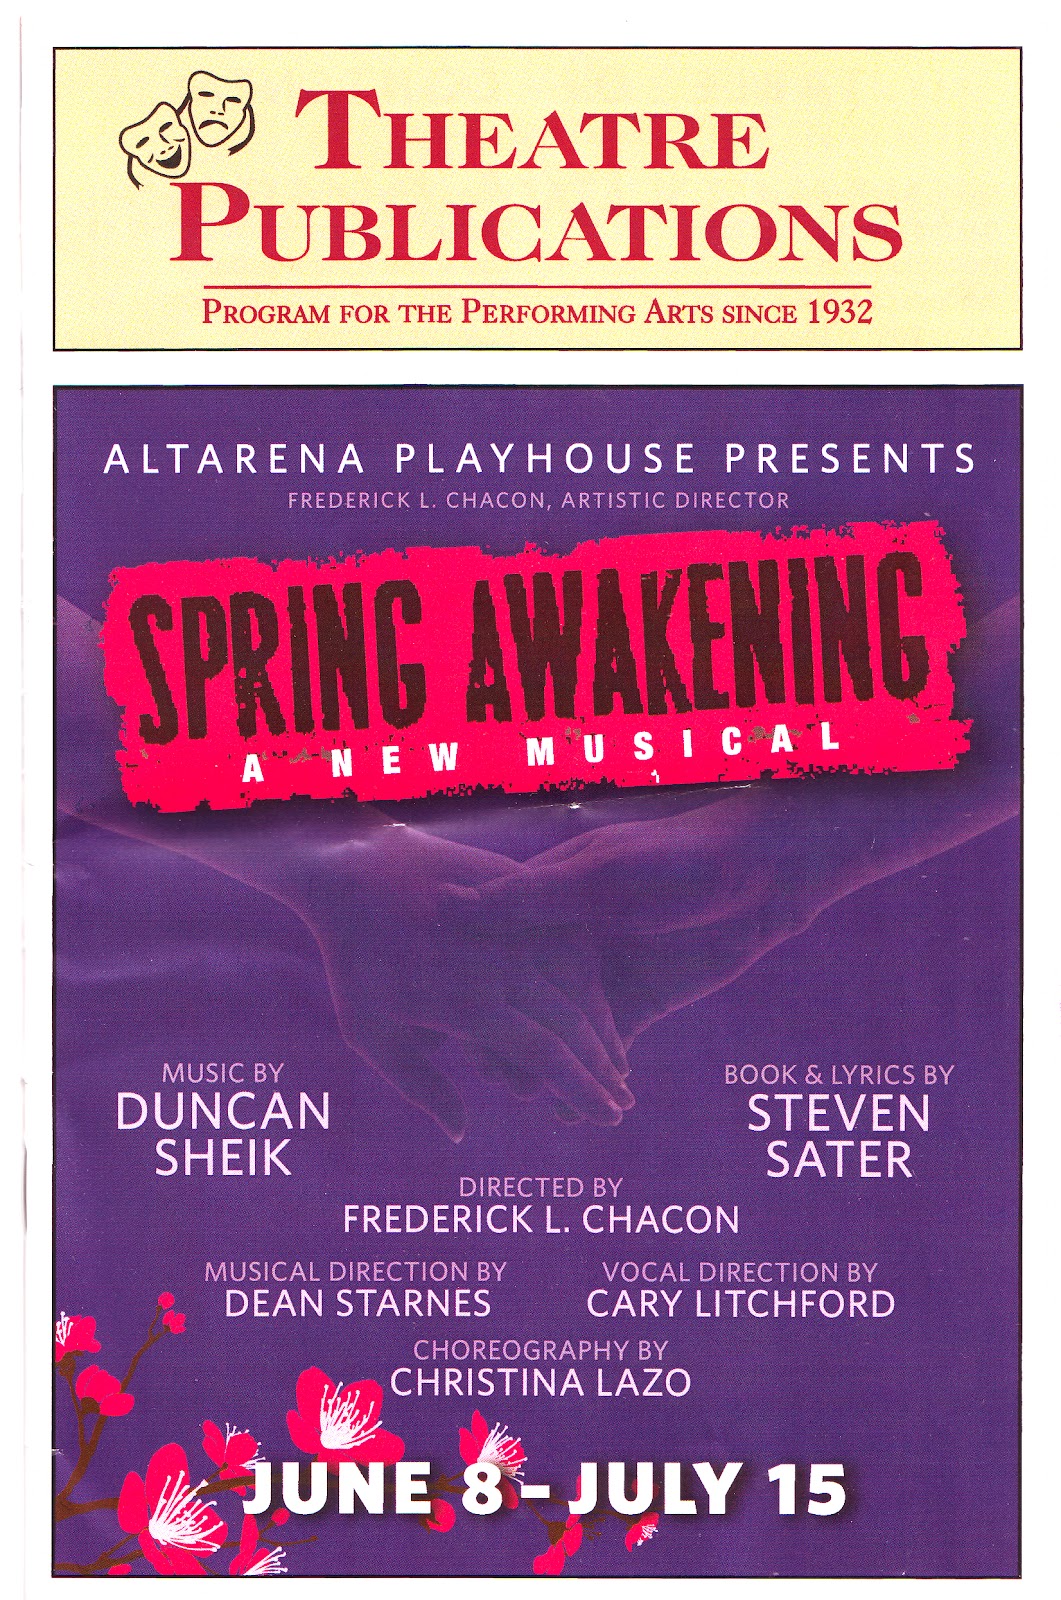 Mike The Content Producer: Spring Awakening at the Altarena Playhouse